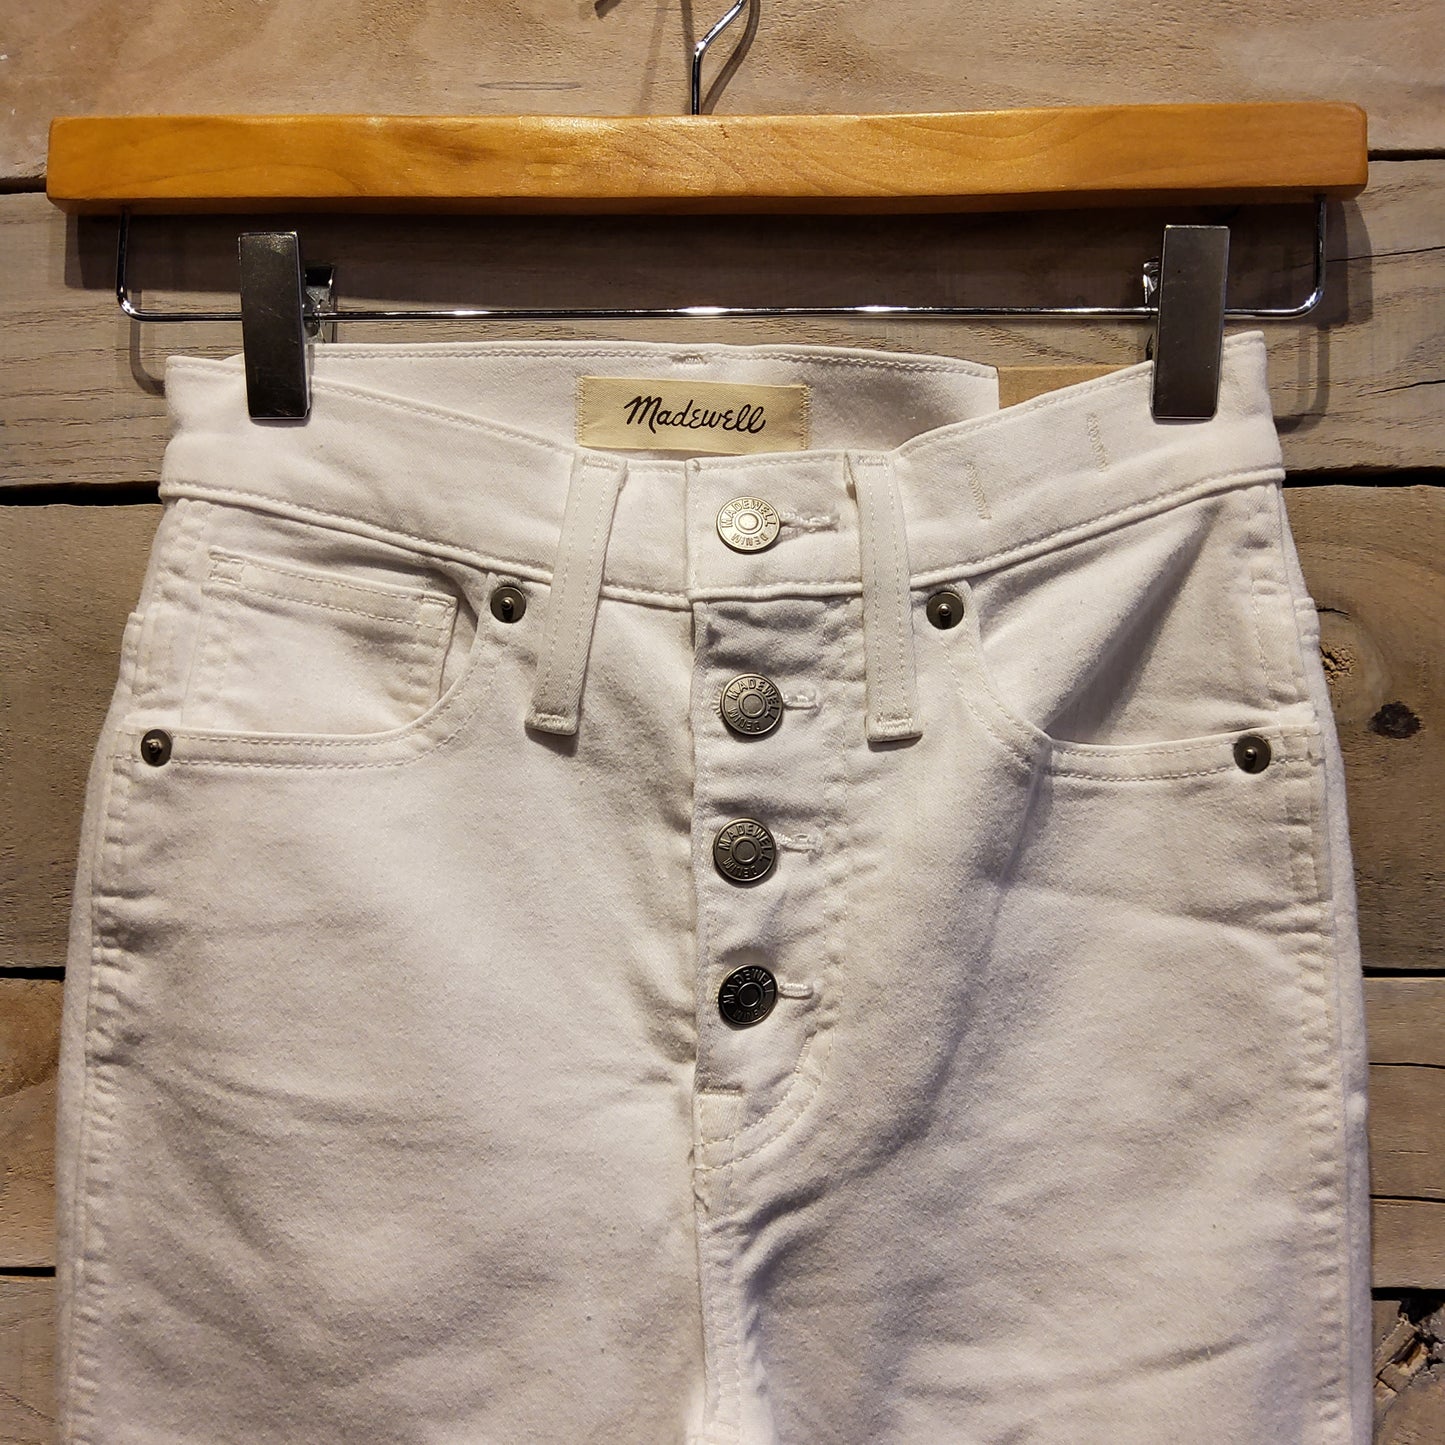 Madewell White Skinny Jeans Sz 23